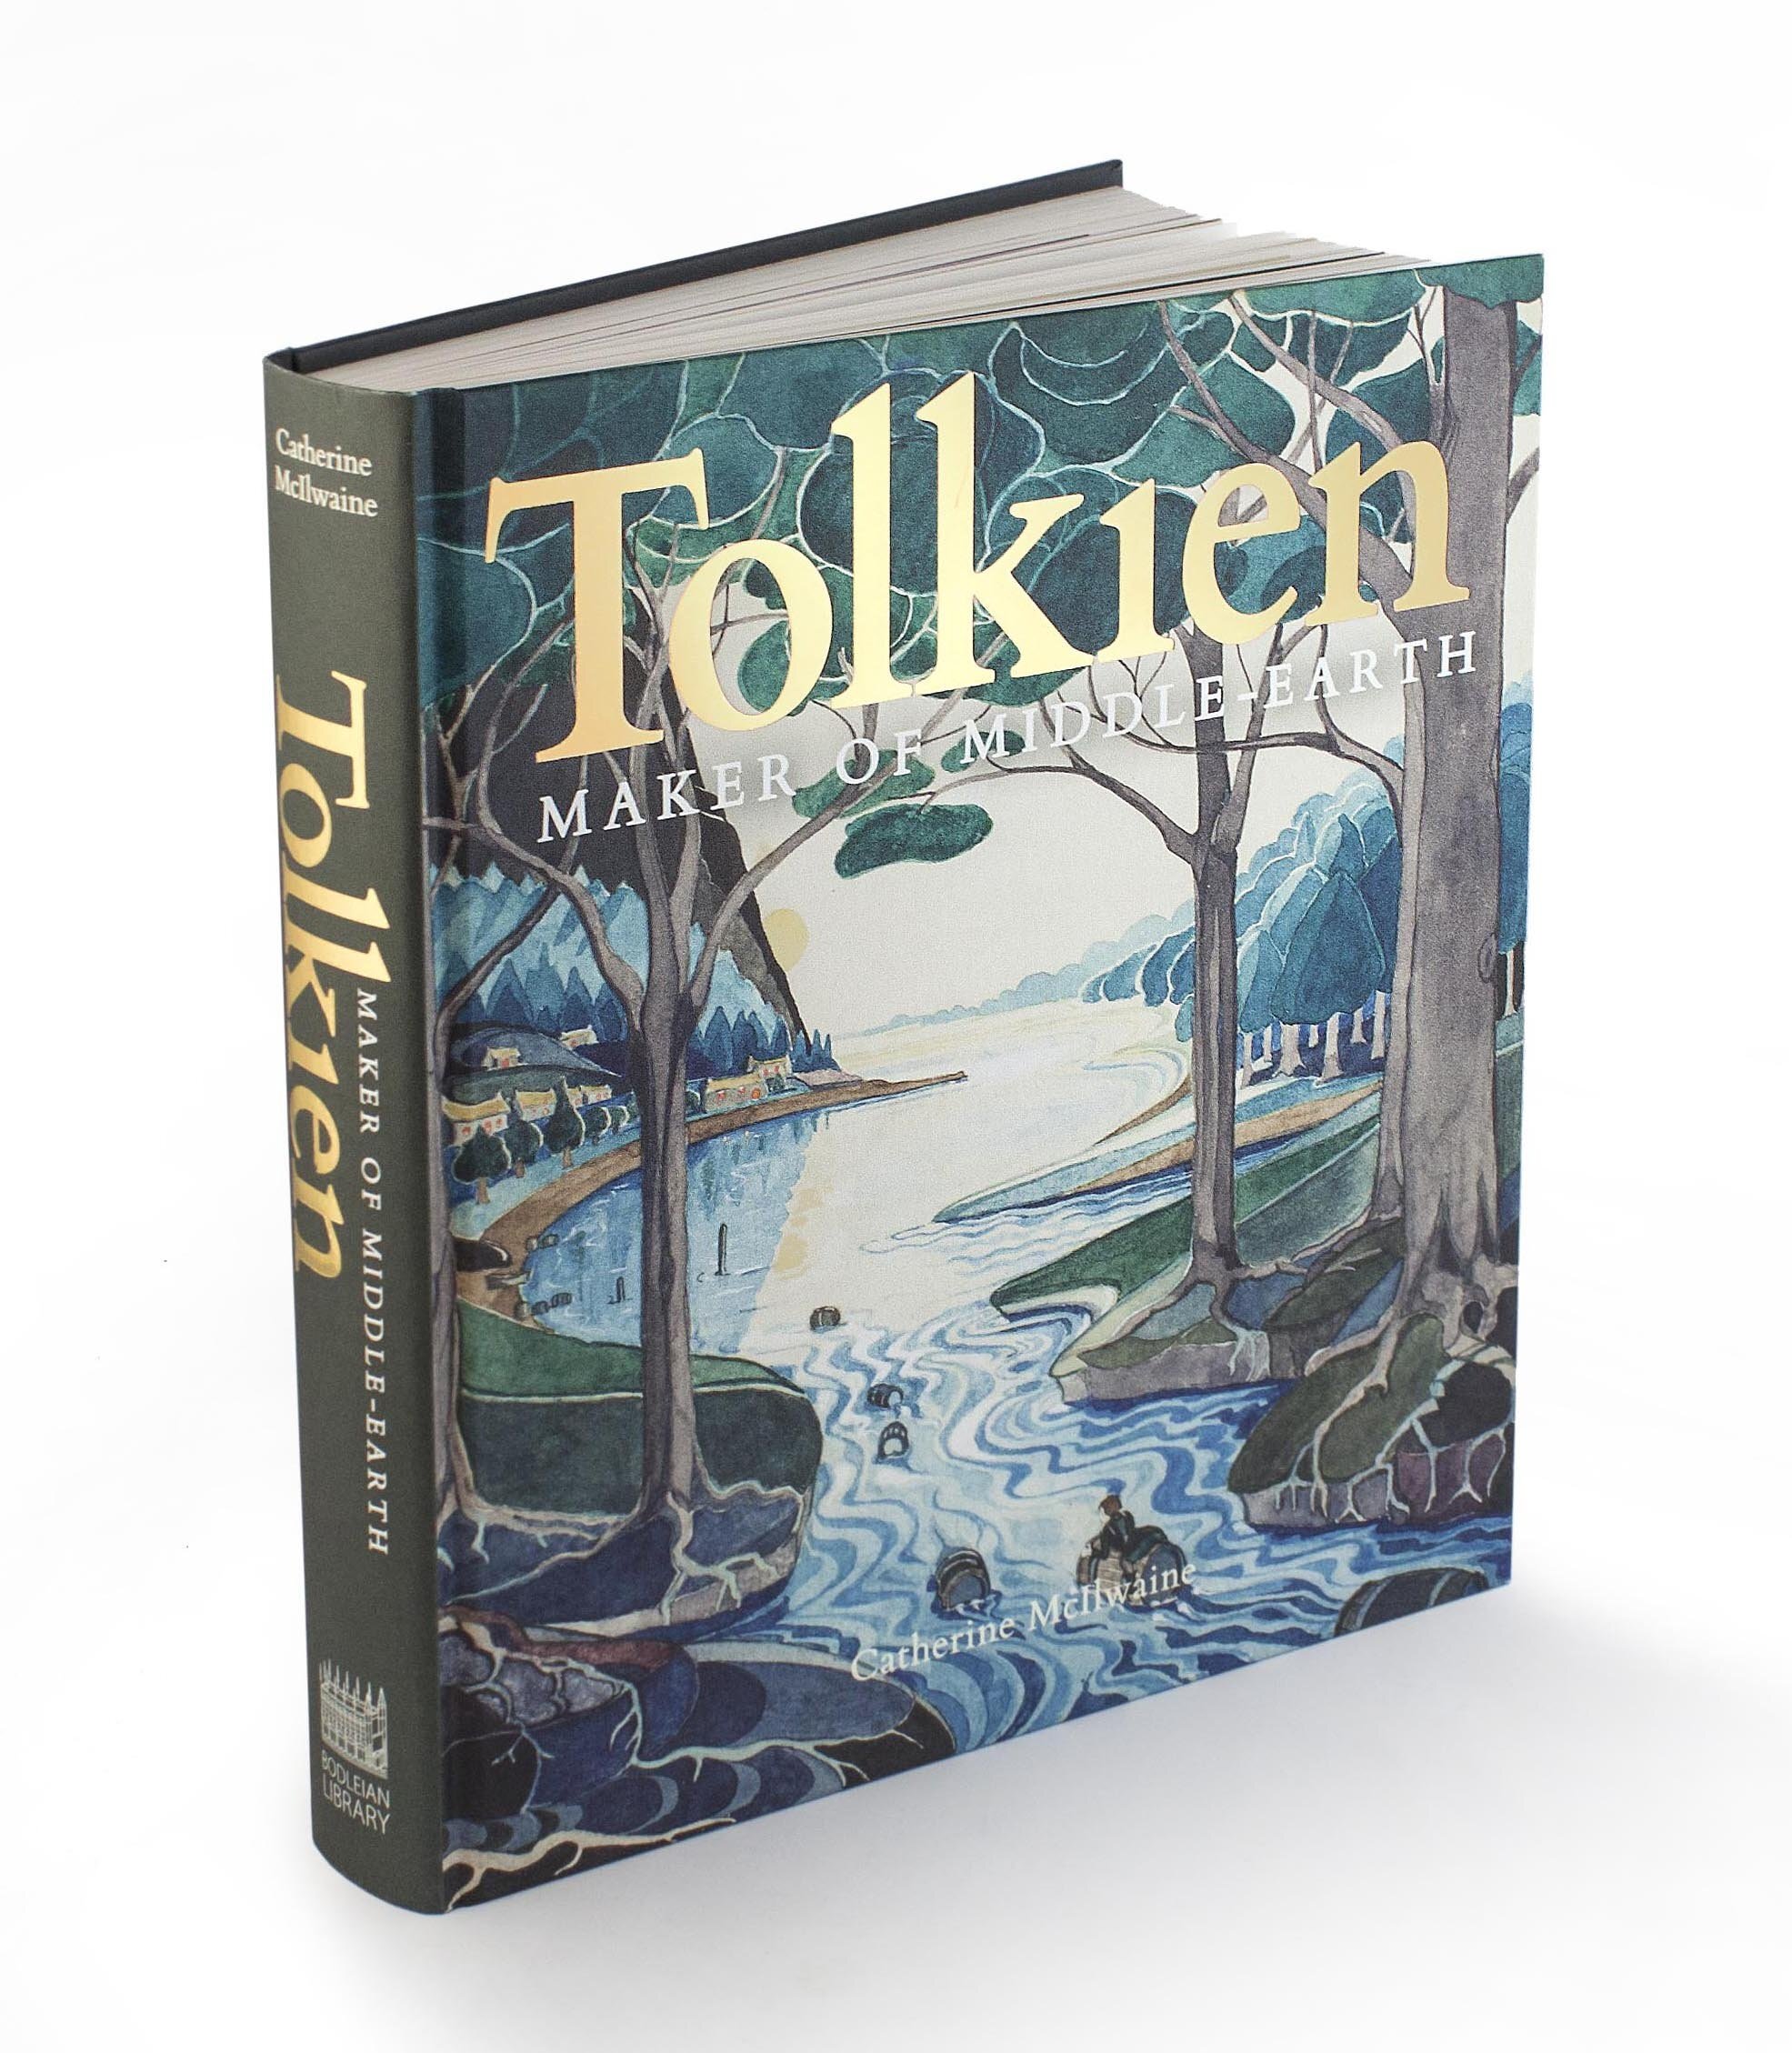 Толкин книги. Книга создание Средиземья. Tolkien maker of Middle-Earth. MCILWAINE Catherine название: Tolkien: maker of Middle-Earth. Толкин средиземье книги